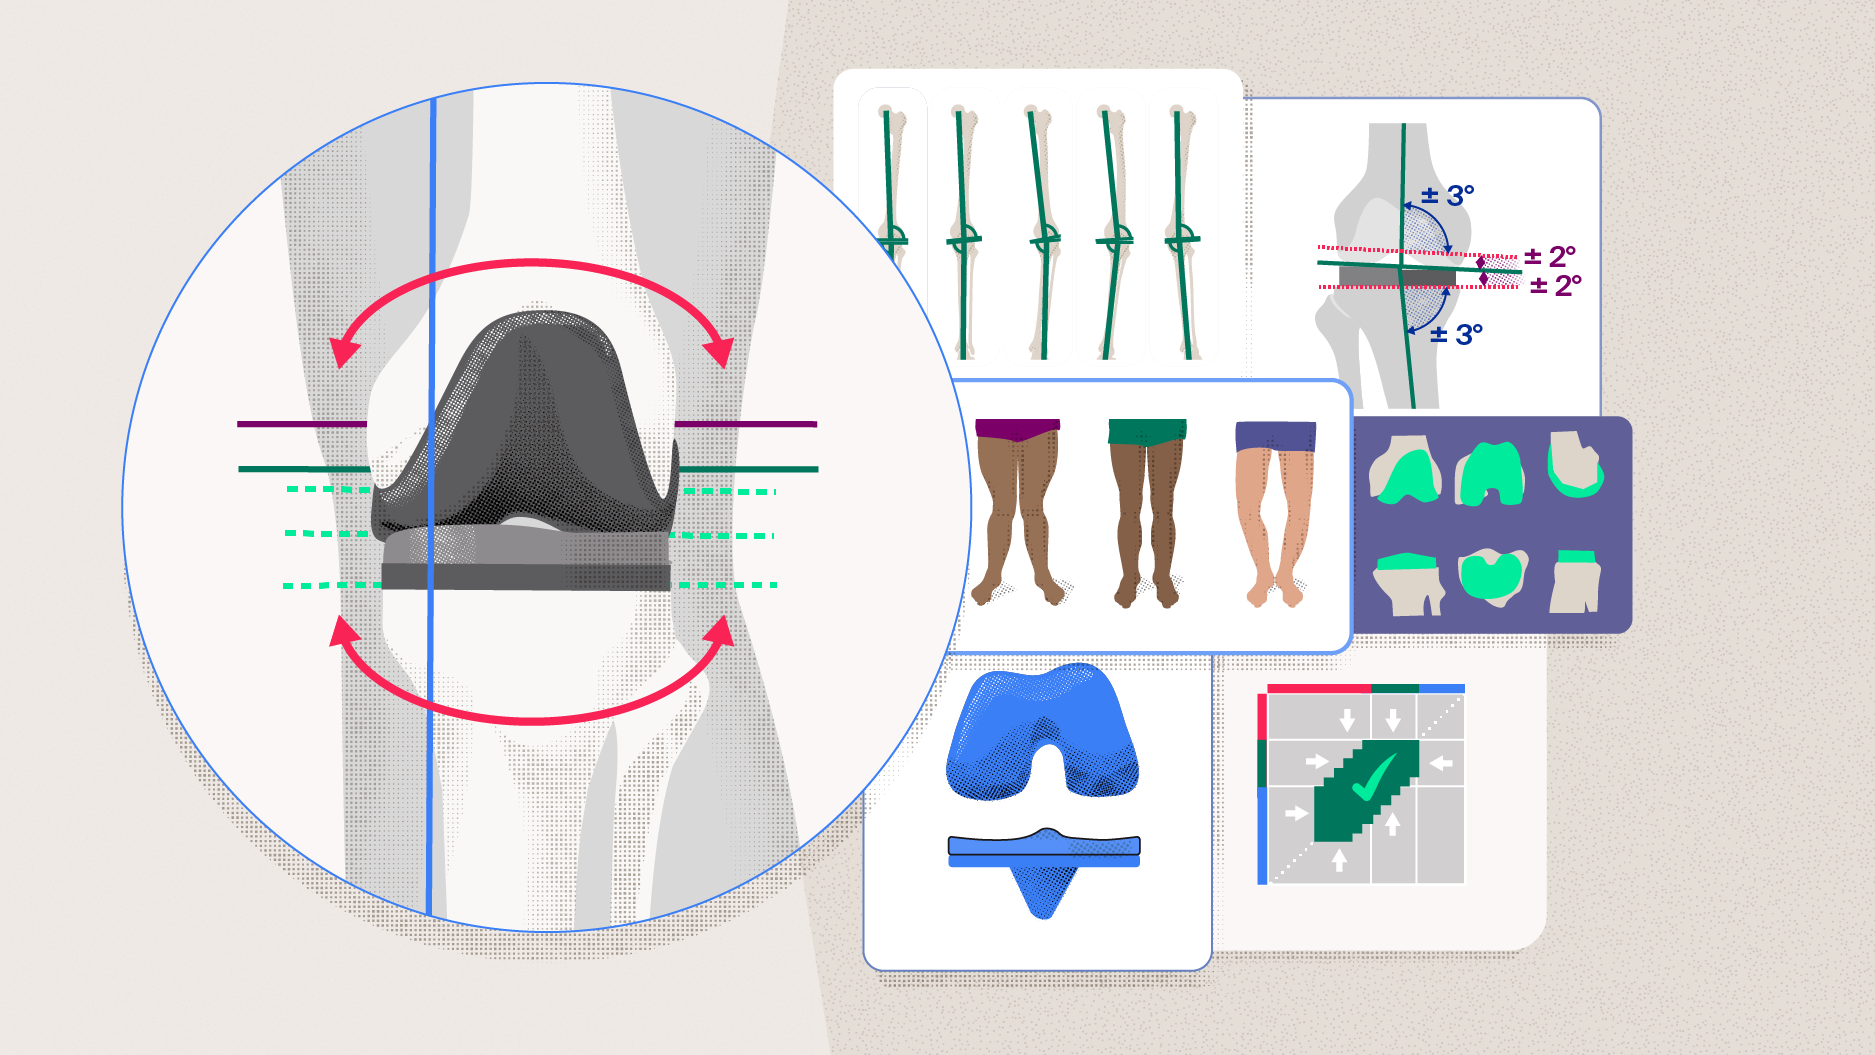 New scientific publication on alignment strategies in total knee arthroplasty